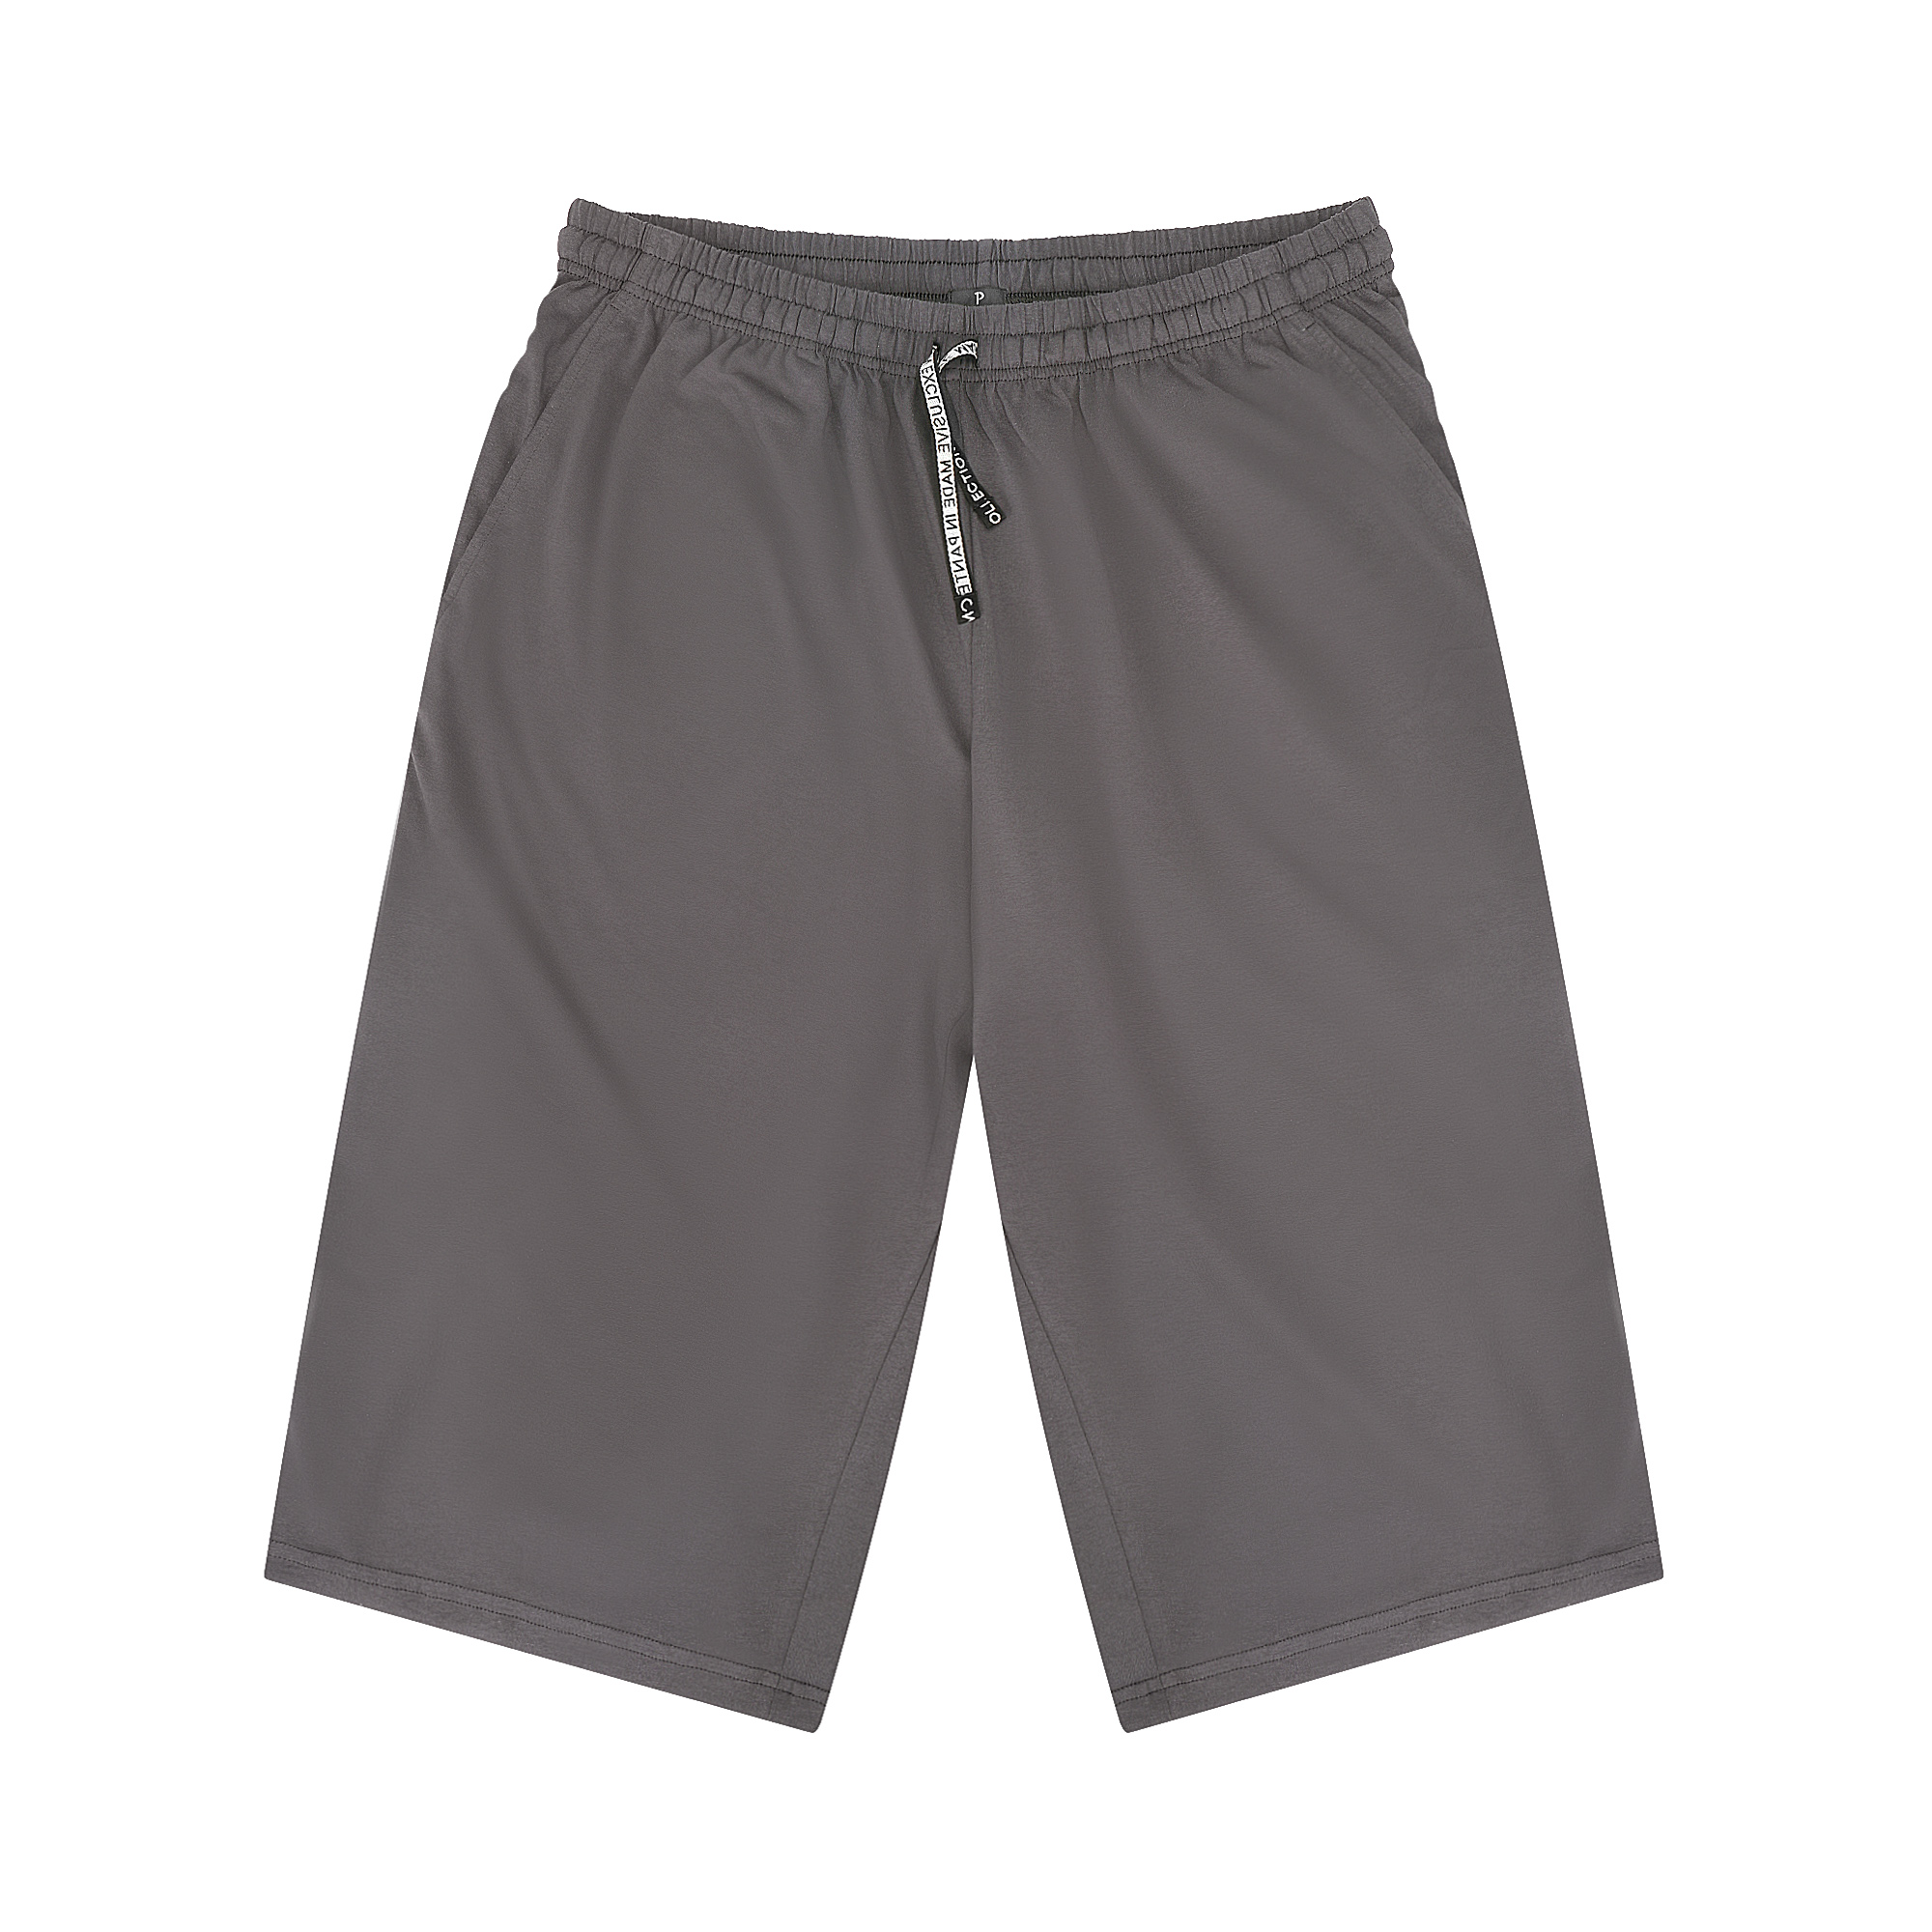 Мужские шорты Pantelemone PHB-112 темно-серые 58, цвет темно-серый, размер 58 - фото 1